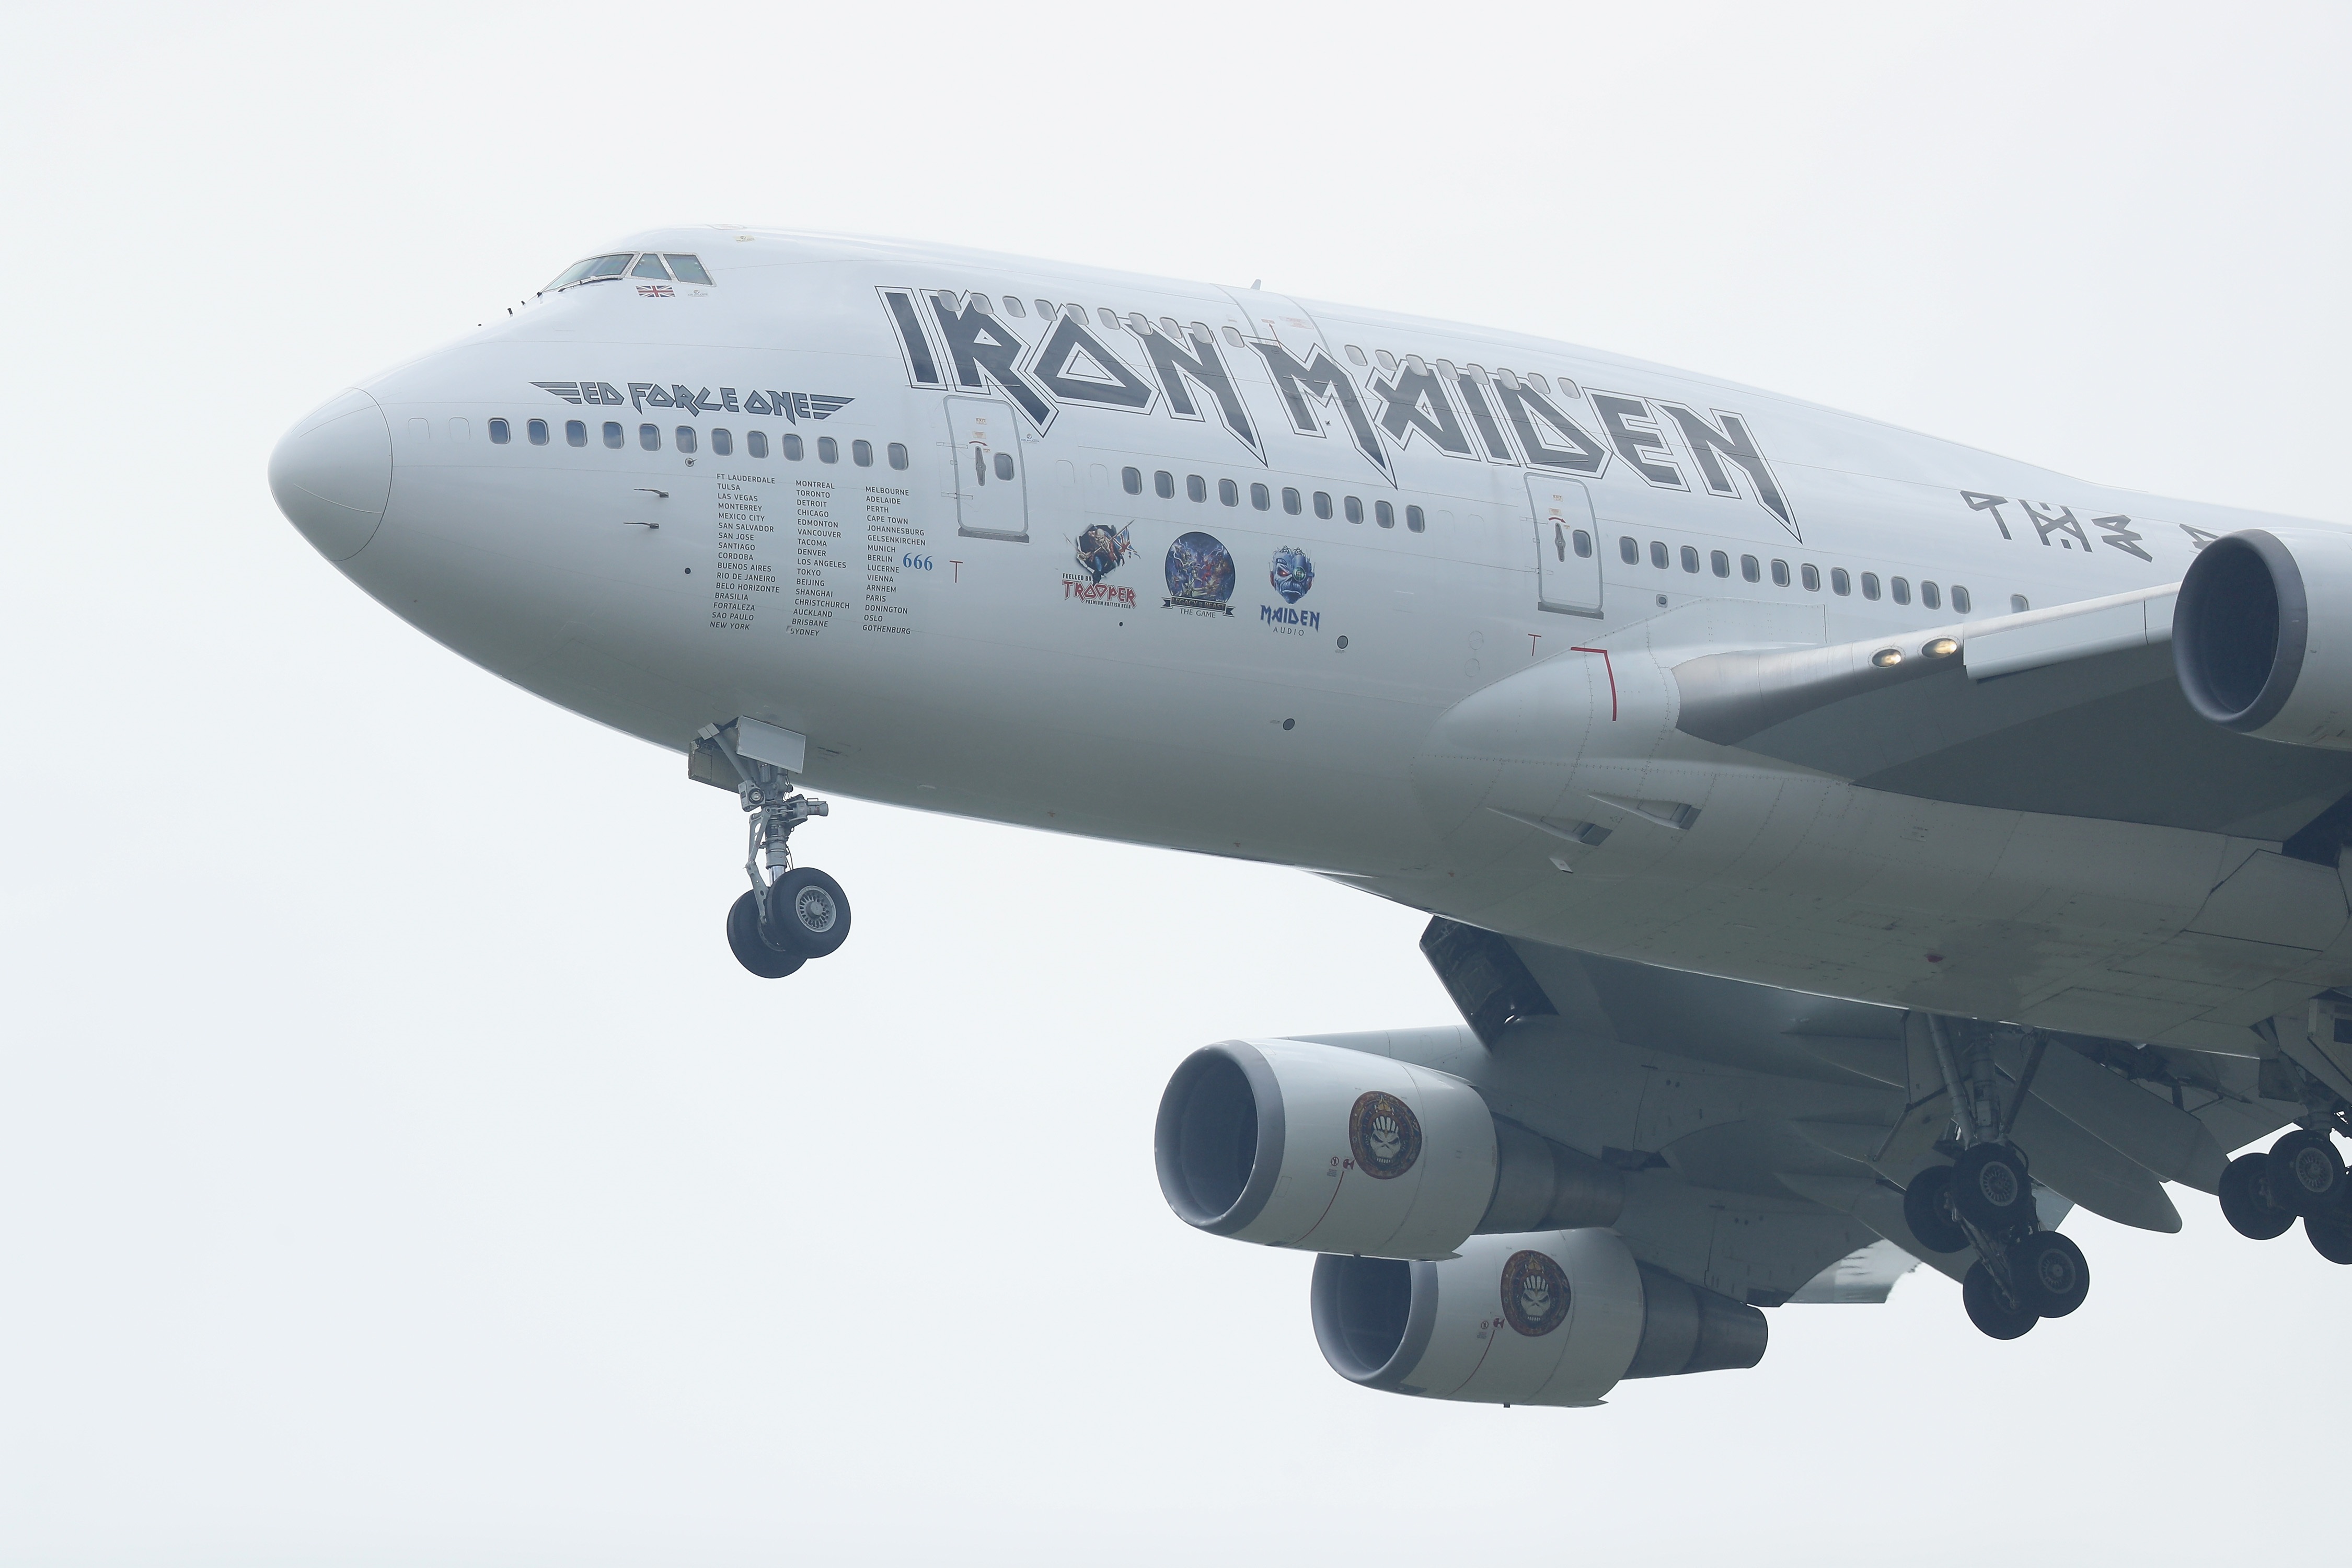 L’aereo degli Iron Maiden eclissa quelli di Angela Merkel e Francois Hollande a Zurigo